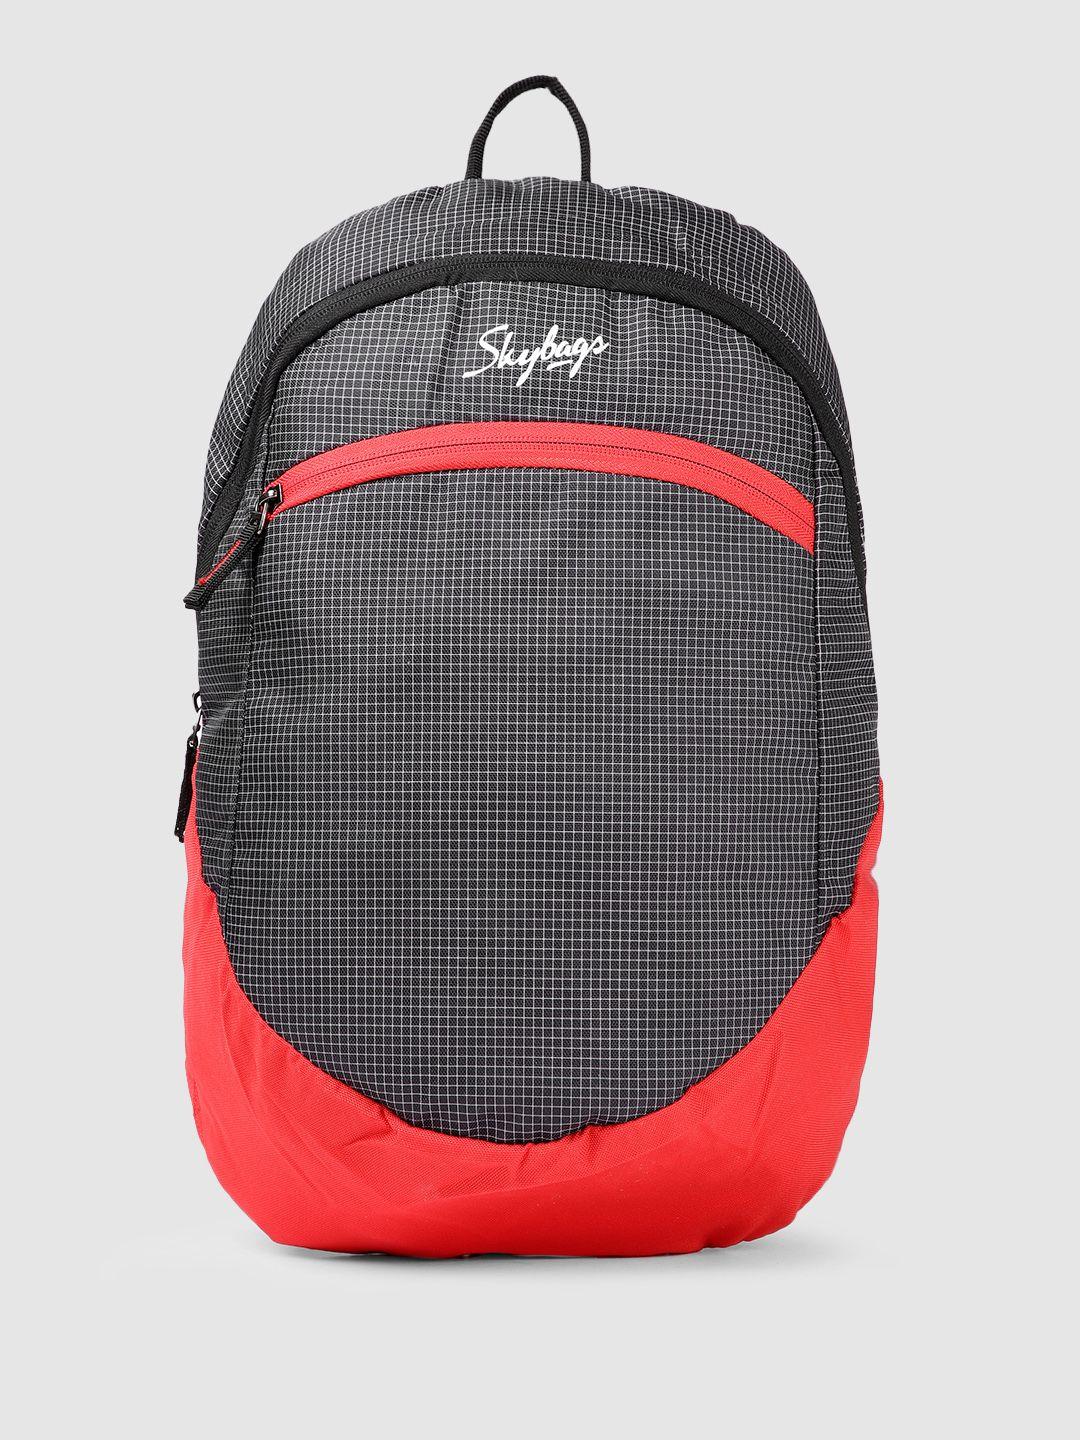 skybags unisex loco 02 grid print backpack